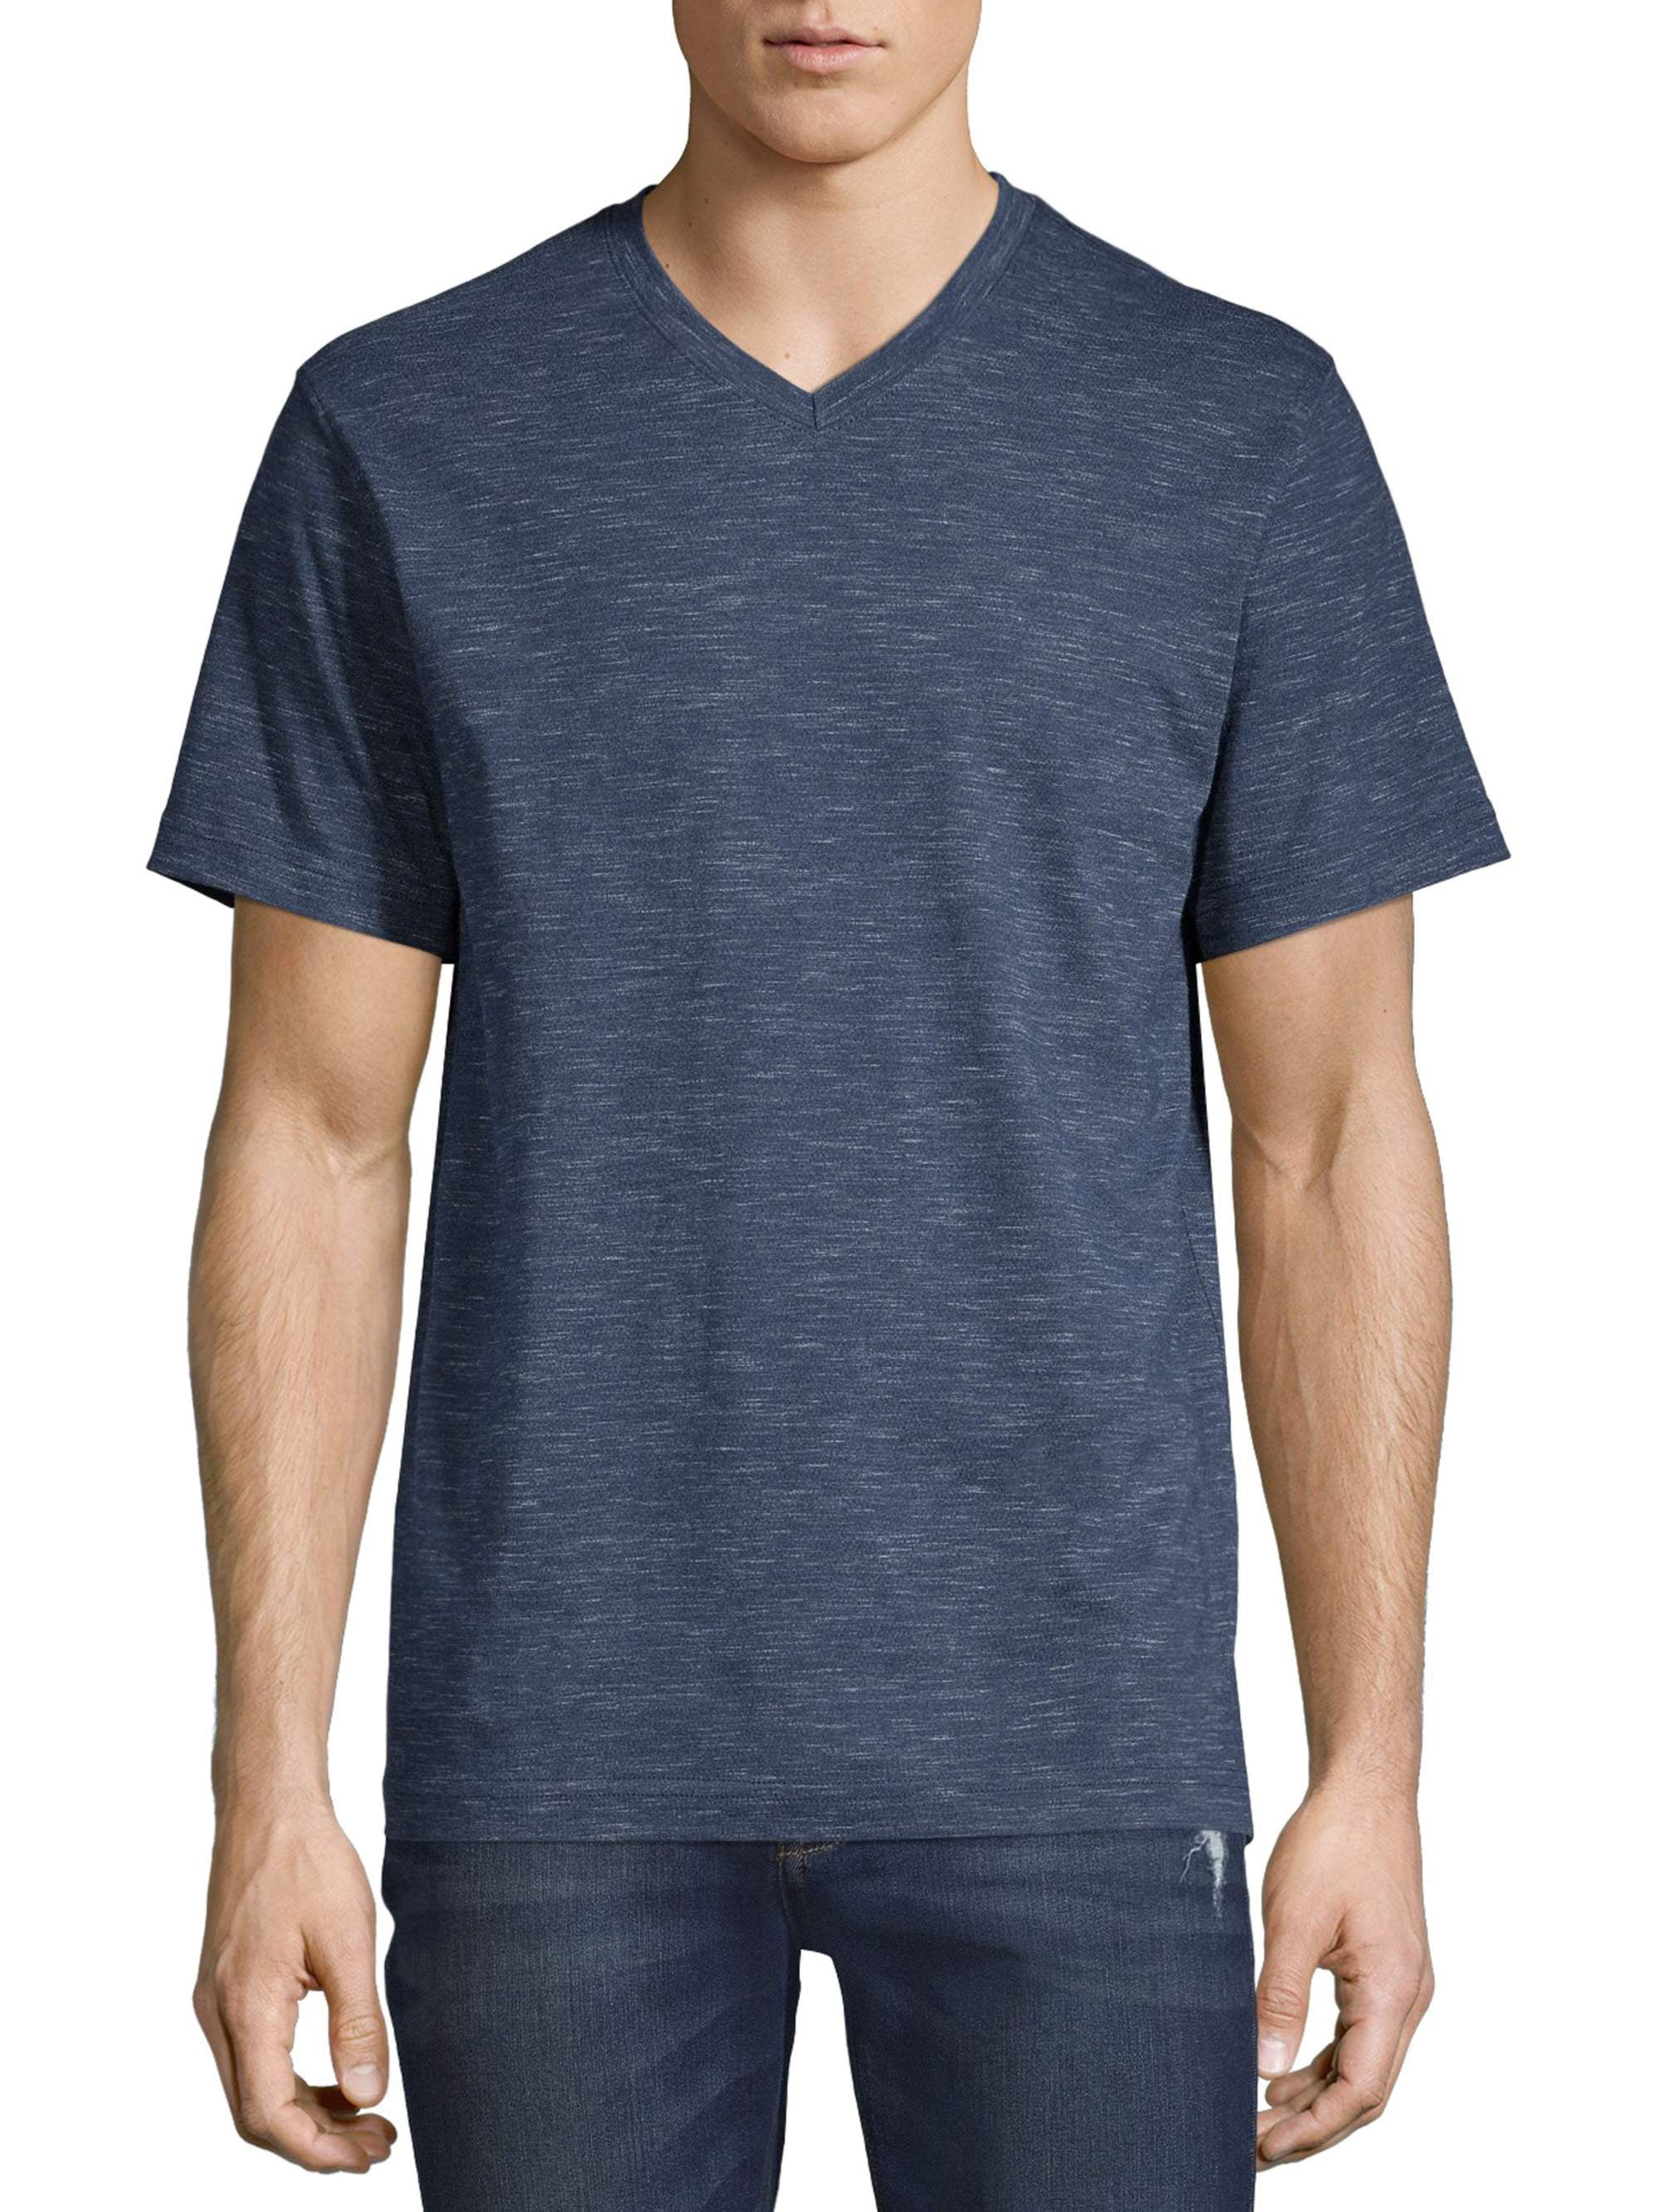 George Men's V-Neck T-Shirt - Walmart.com